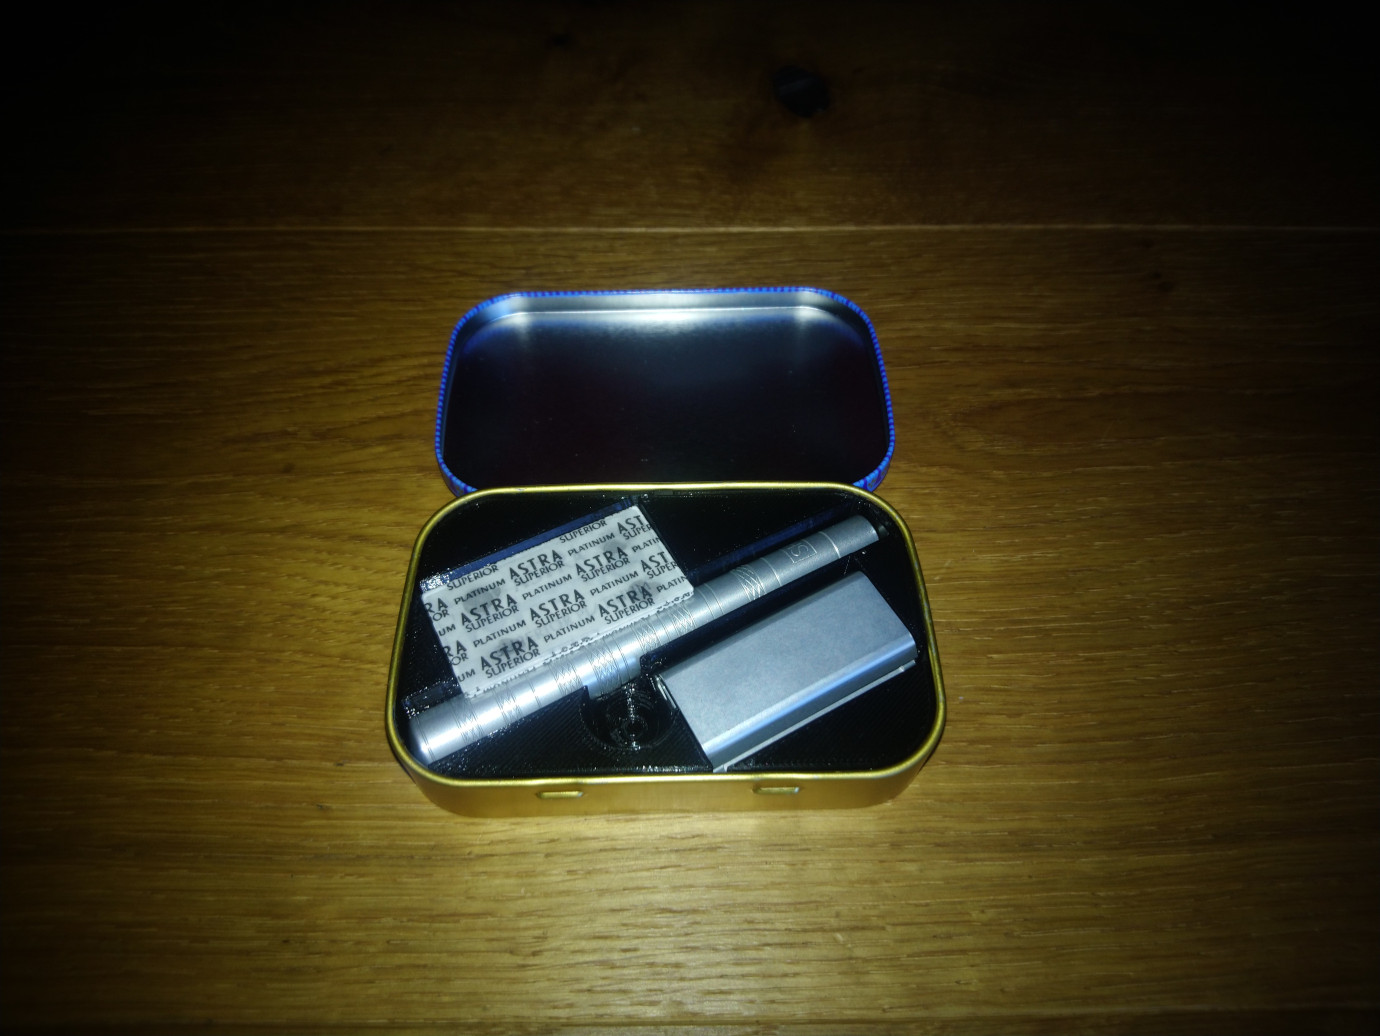 henson AL13 double edge razor insert for grether's pastilles tin box